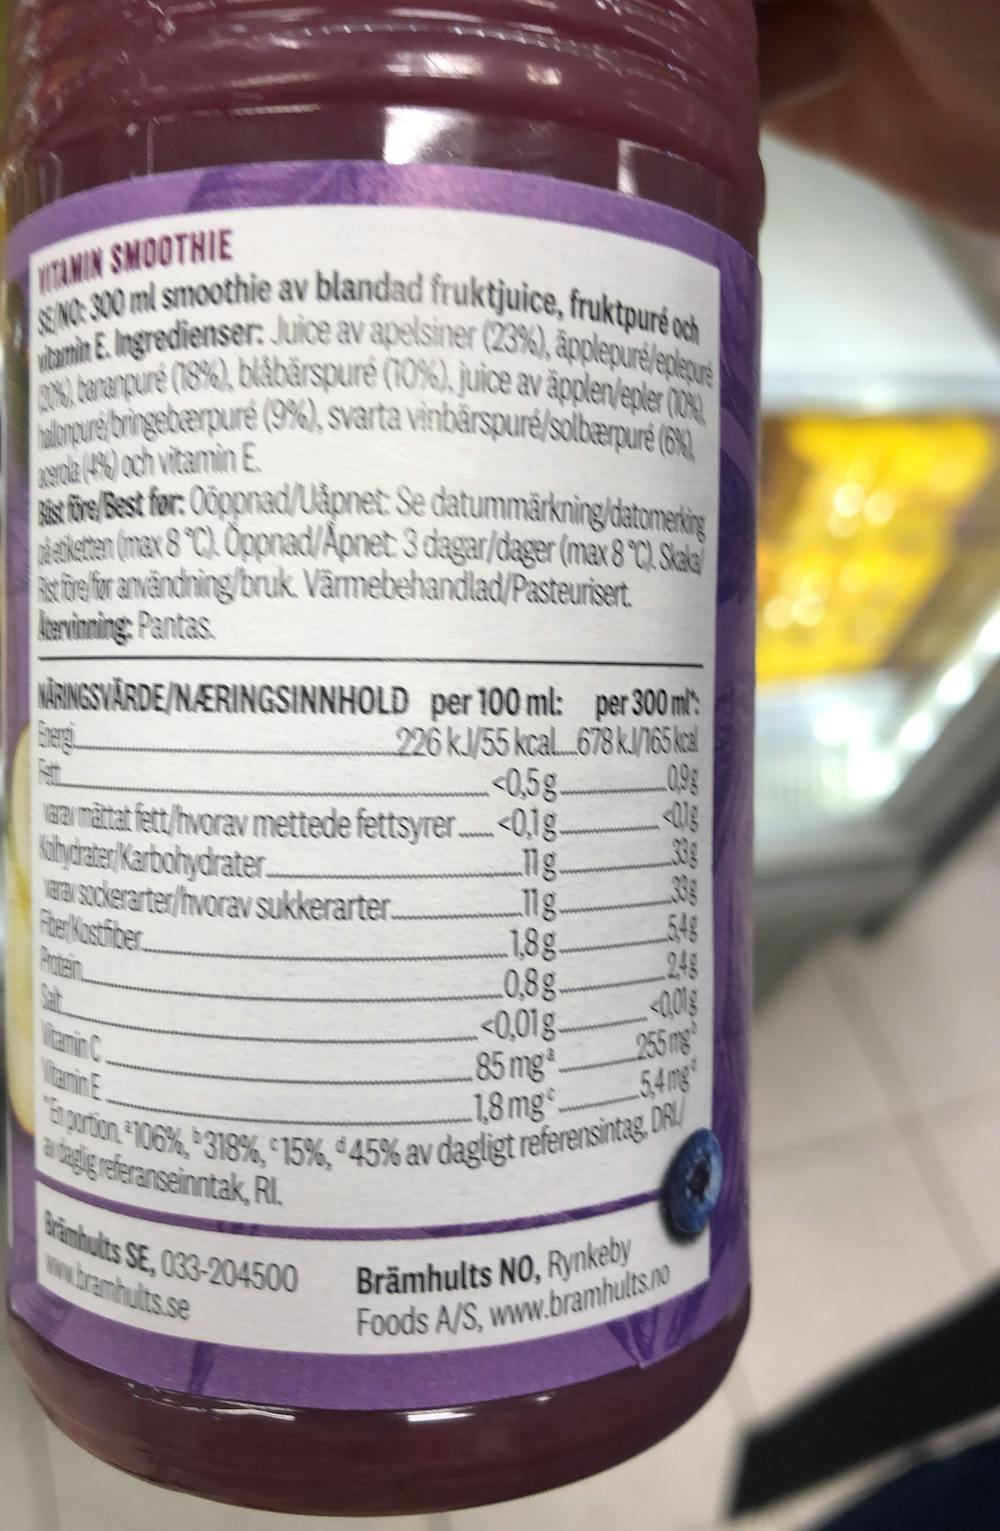 Ingredienslisten til Brämhults Vitaminsmoothie